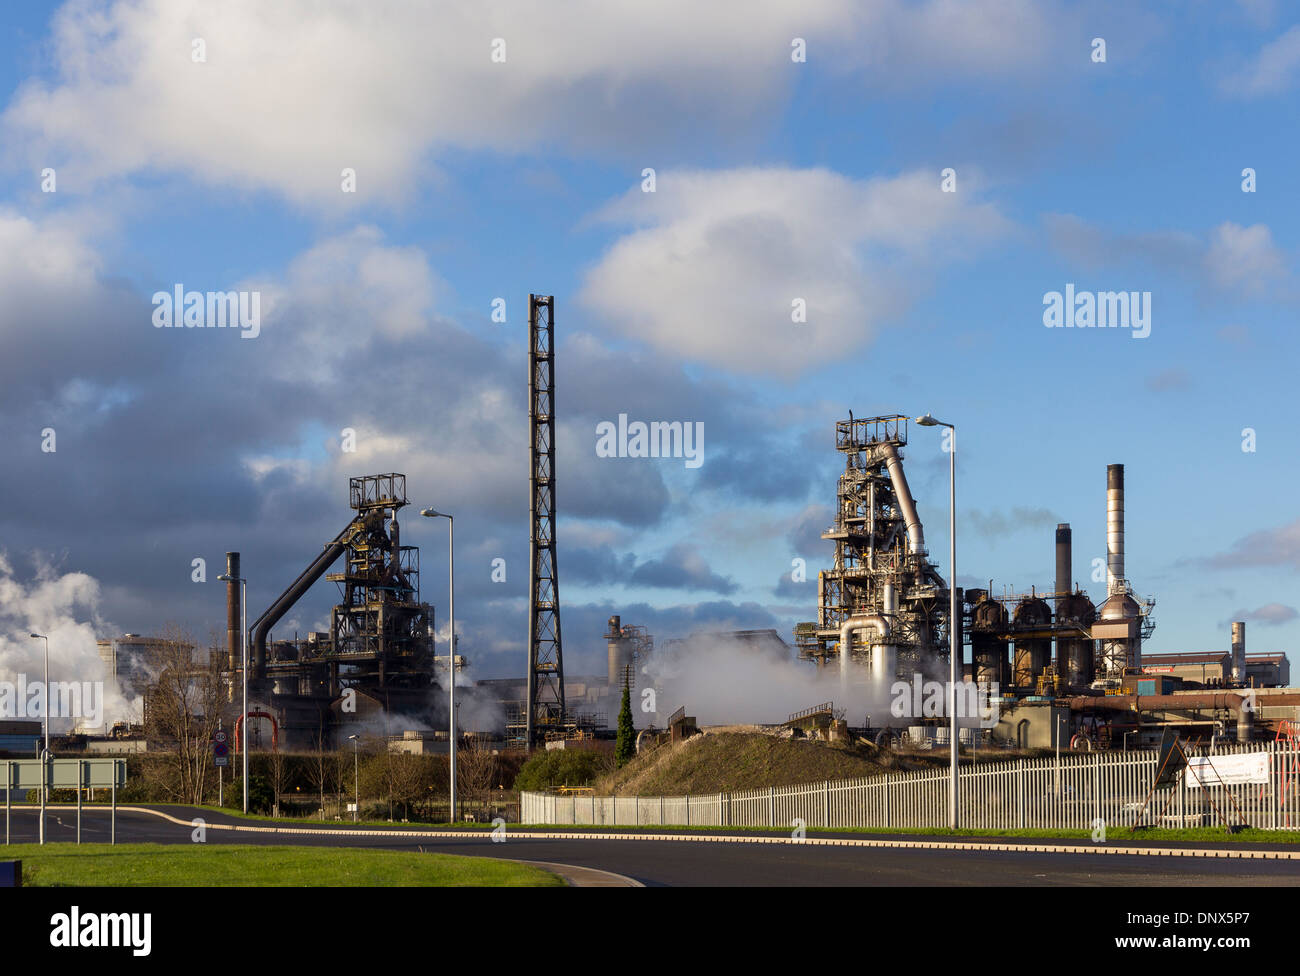 Port Talbot, Wales, UK - 20 November 2013: Blast furnaces at the steelworks Port Talbot, West Glamorgan, Wales Stock Photo